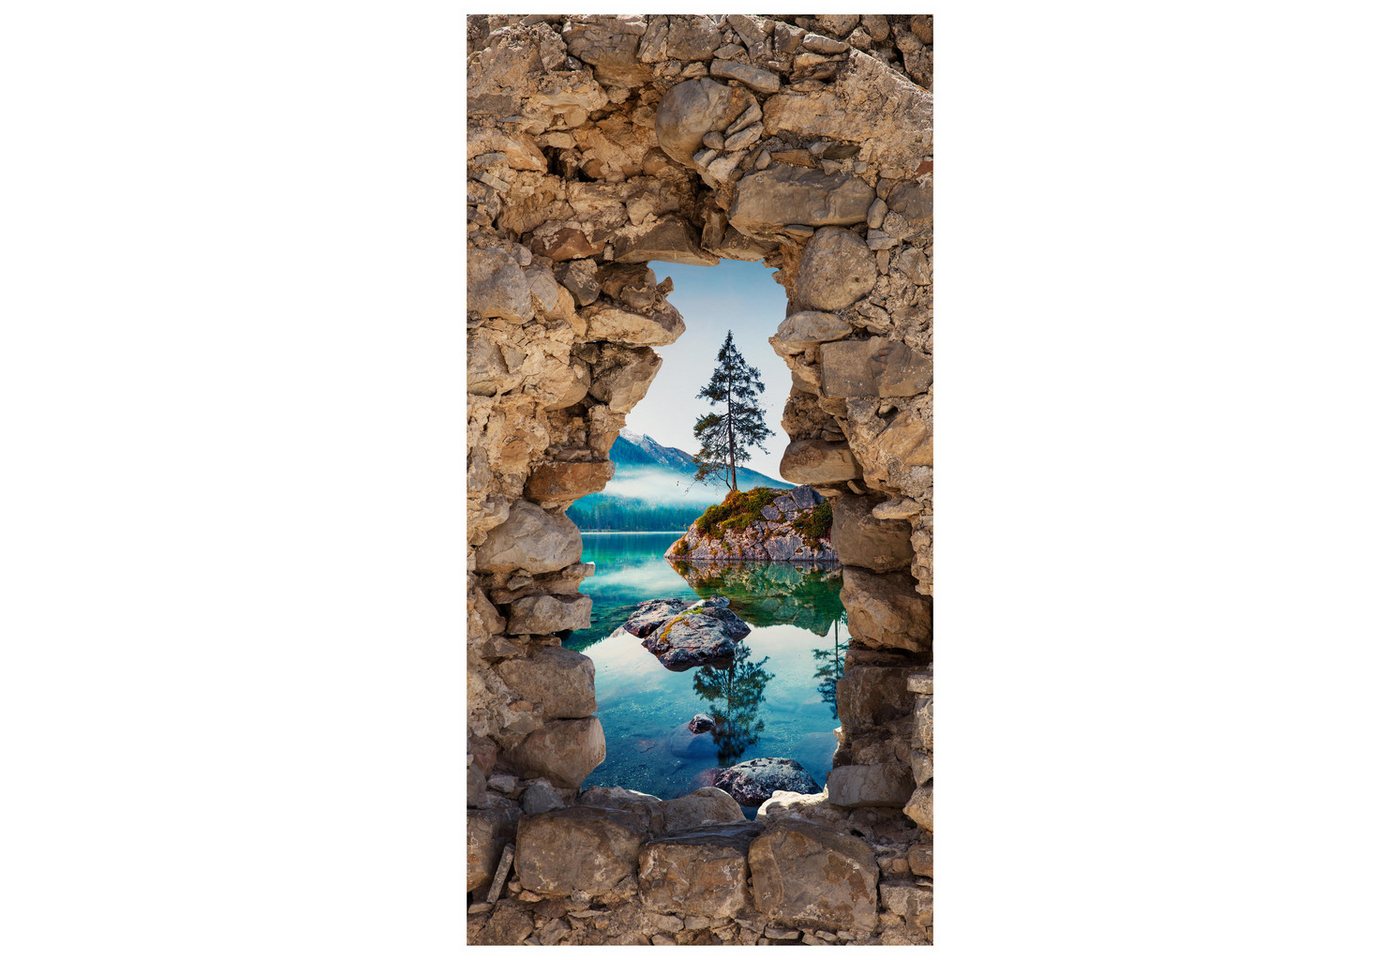 wandmotiv24 Türtapete 3D Naturstein, See, Berge, Baum, Felsen, glatt, Fototapete, Wandtapete, Motivtapete, matt, selbstklebende Vliestapete von wandmotiv24